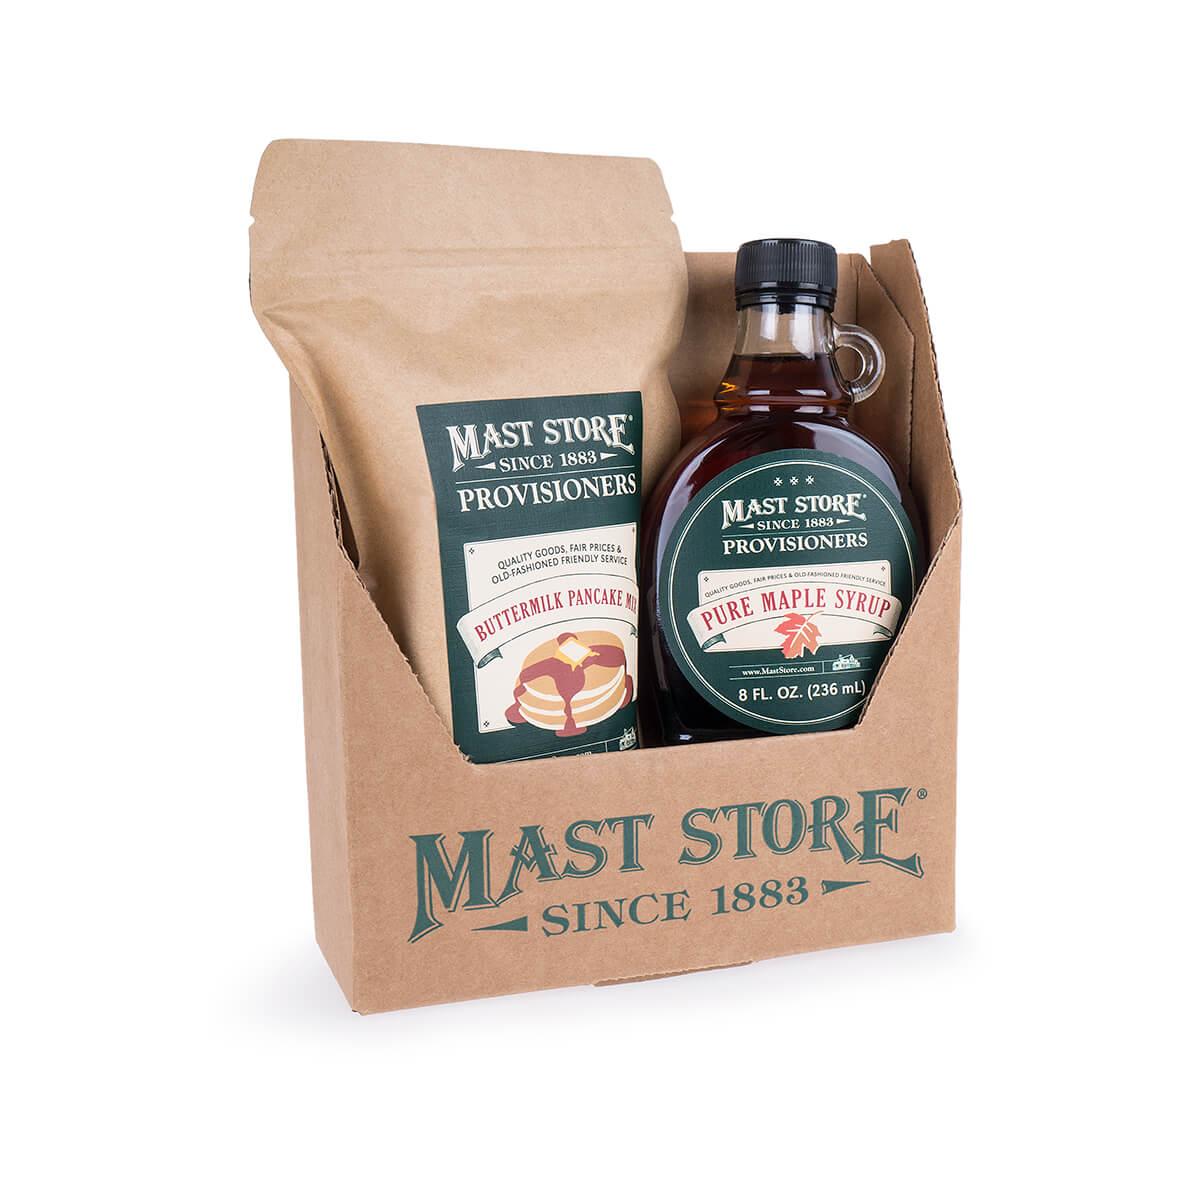  Mast Store Provisioners Breakfast Gift Box - Small